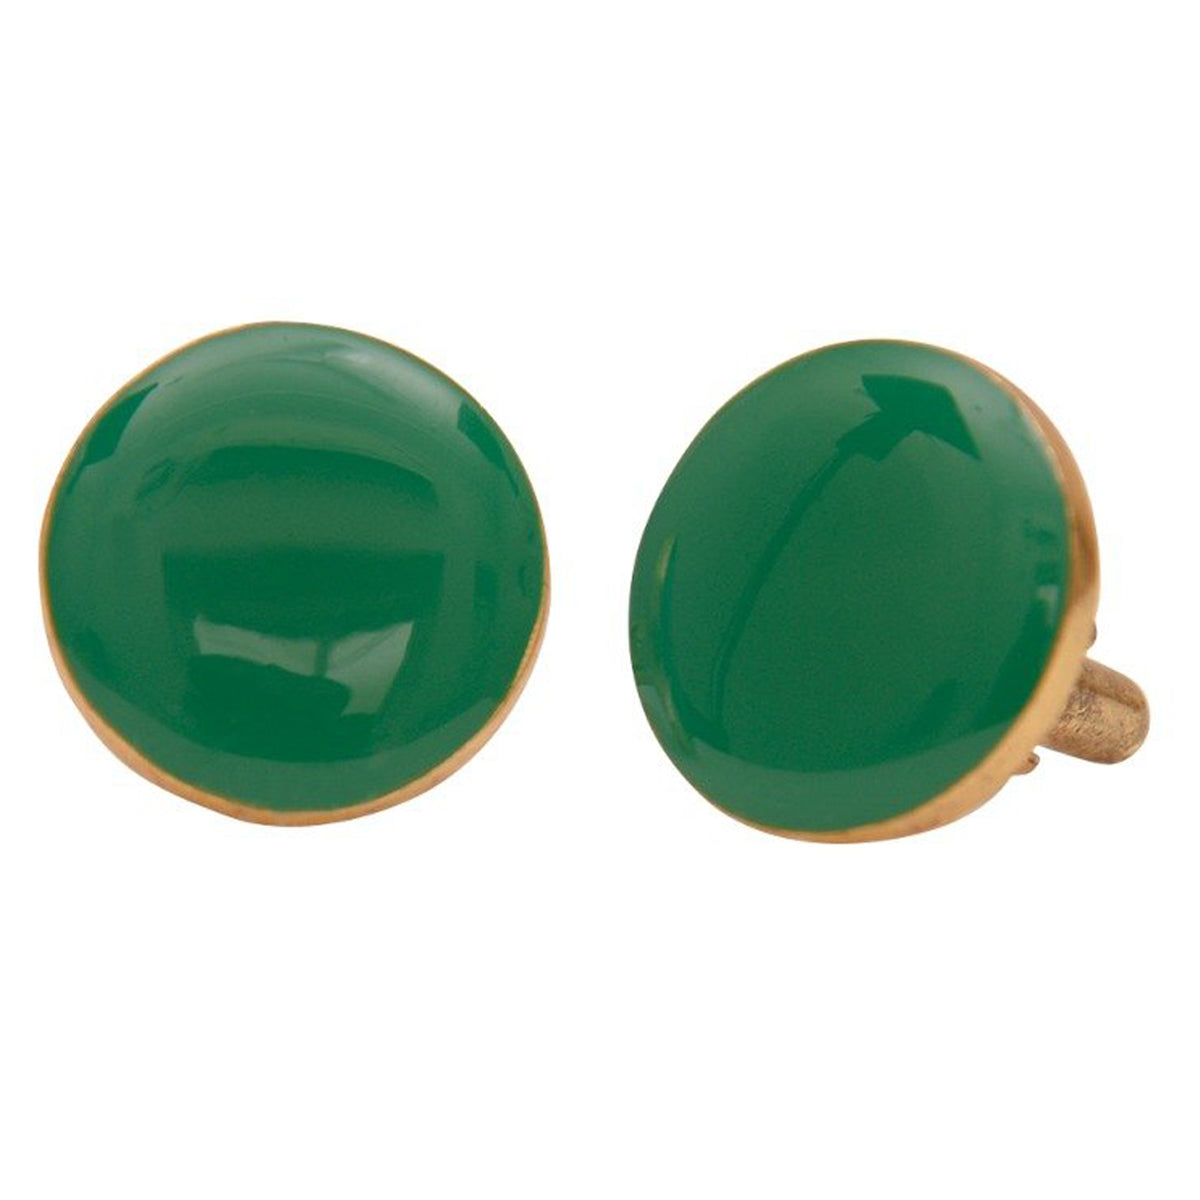 Chokore Green color Round shape Cufflinks